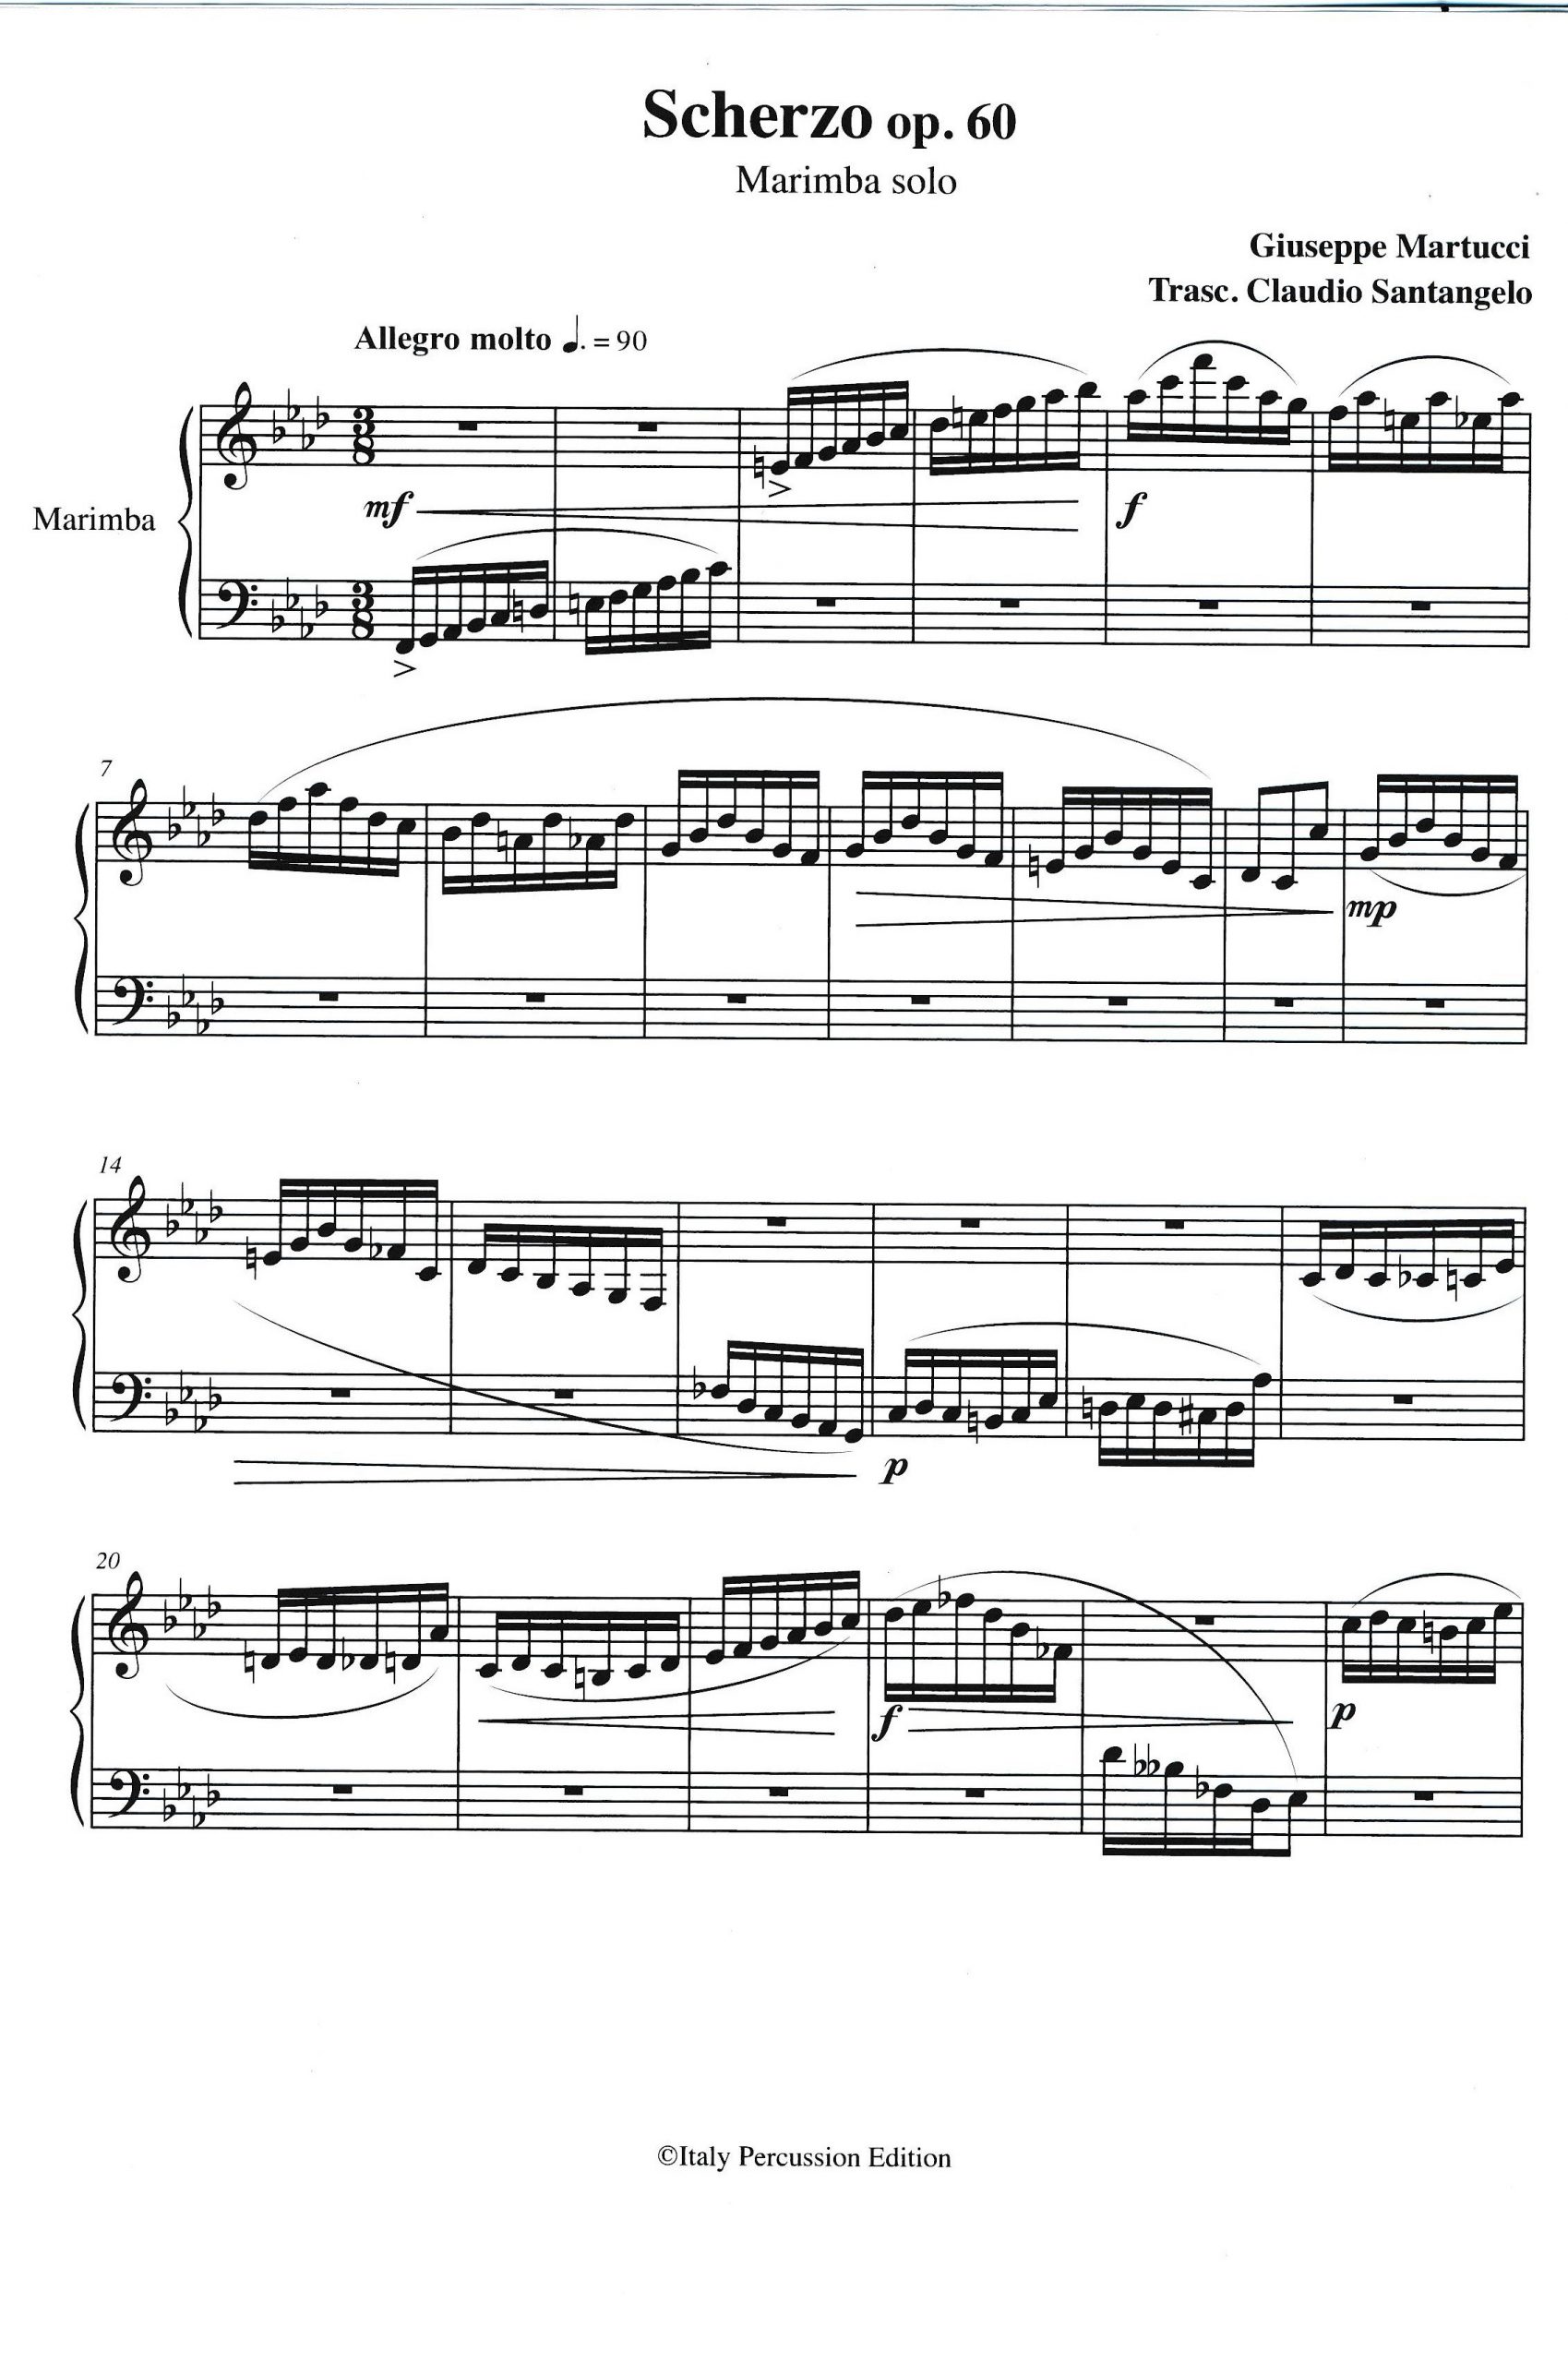 Scherzo op. 60 by Martucci arr. Claudio Santangelo